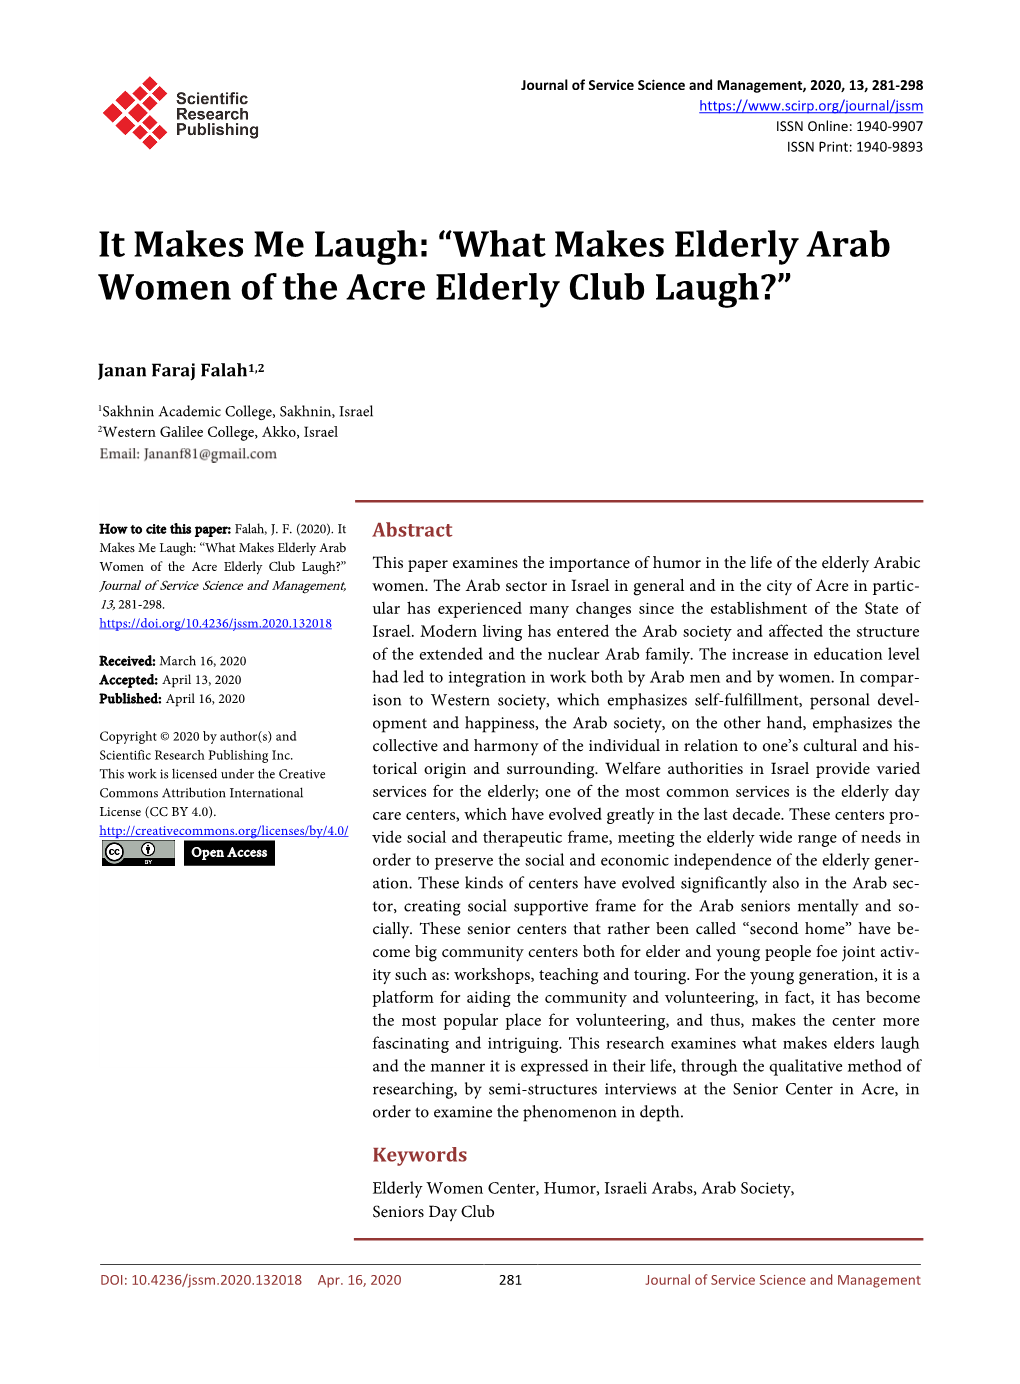 What Makes Elderly Arab Women of the Acre Elderly Club Laugh?”